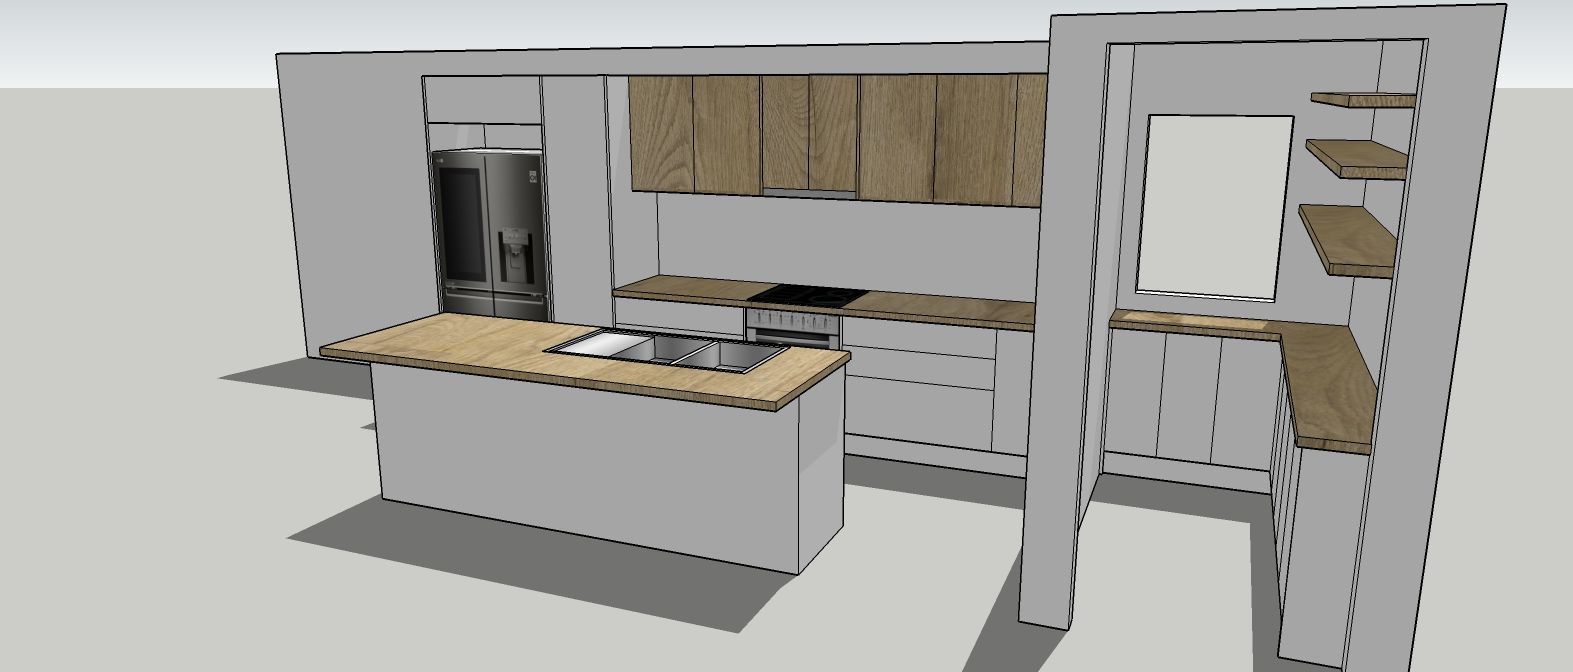 New kitchen build | Bunnings Workshop community